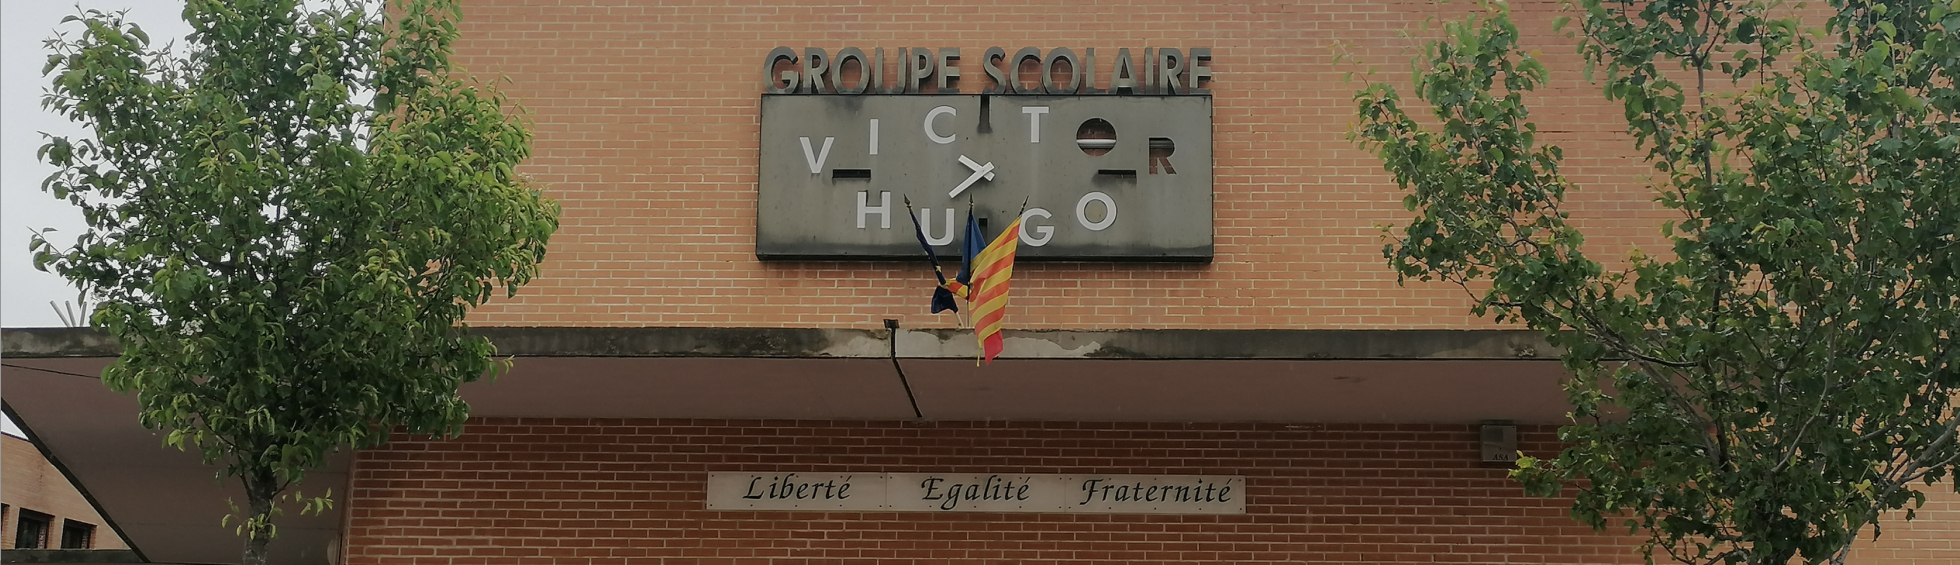 Victor HUGO